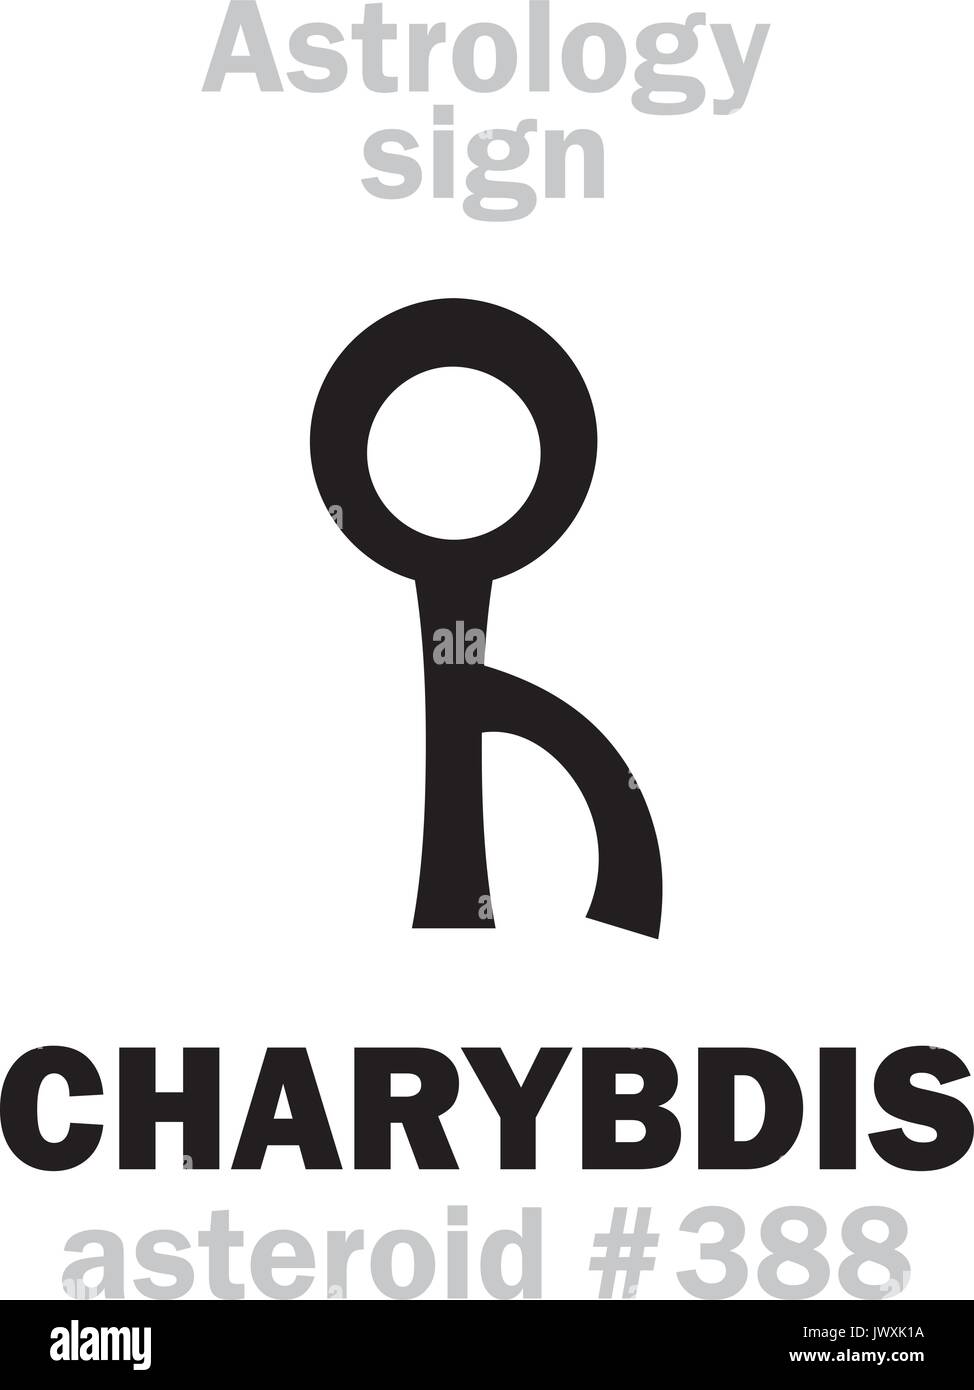 Astrology Alphabet: CHARYBDIS, asteroid #388. Hieroglyphics character sign (single symbol). Stock Vector